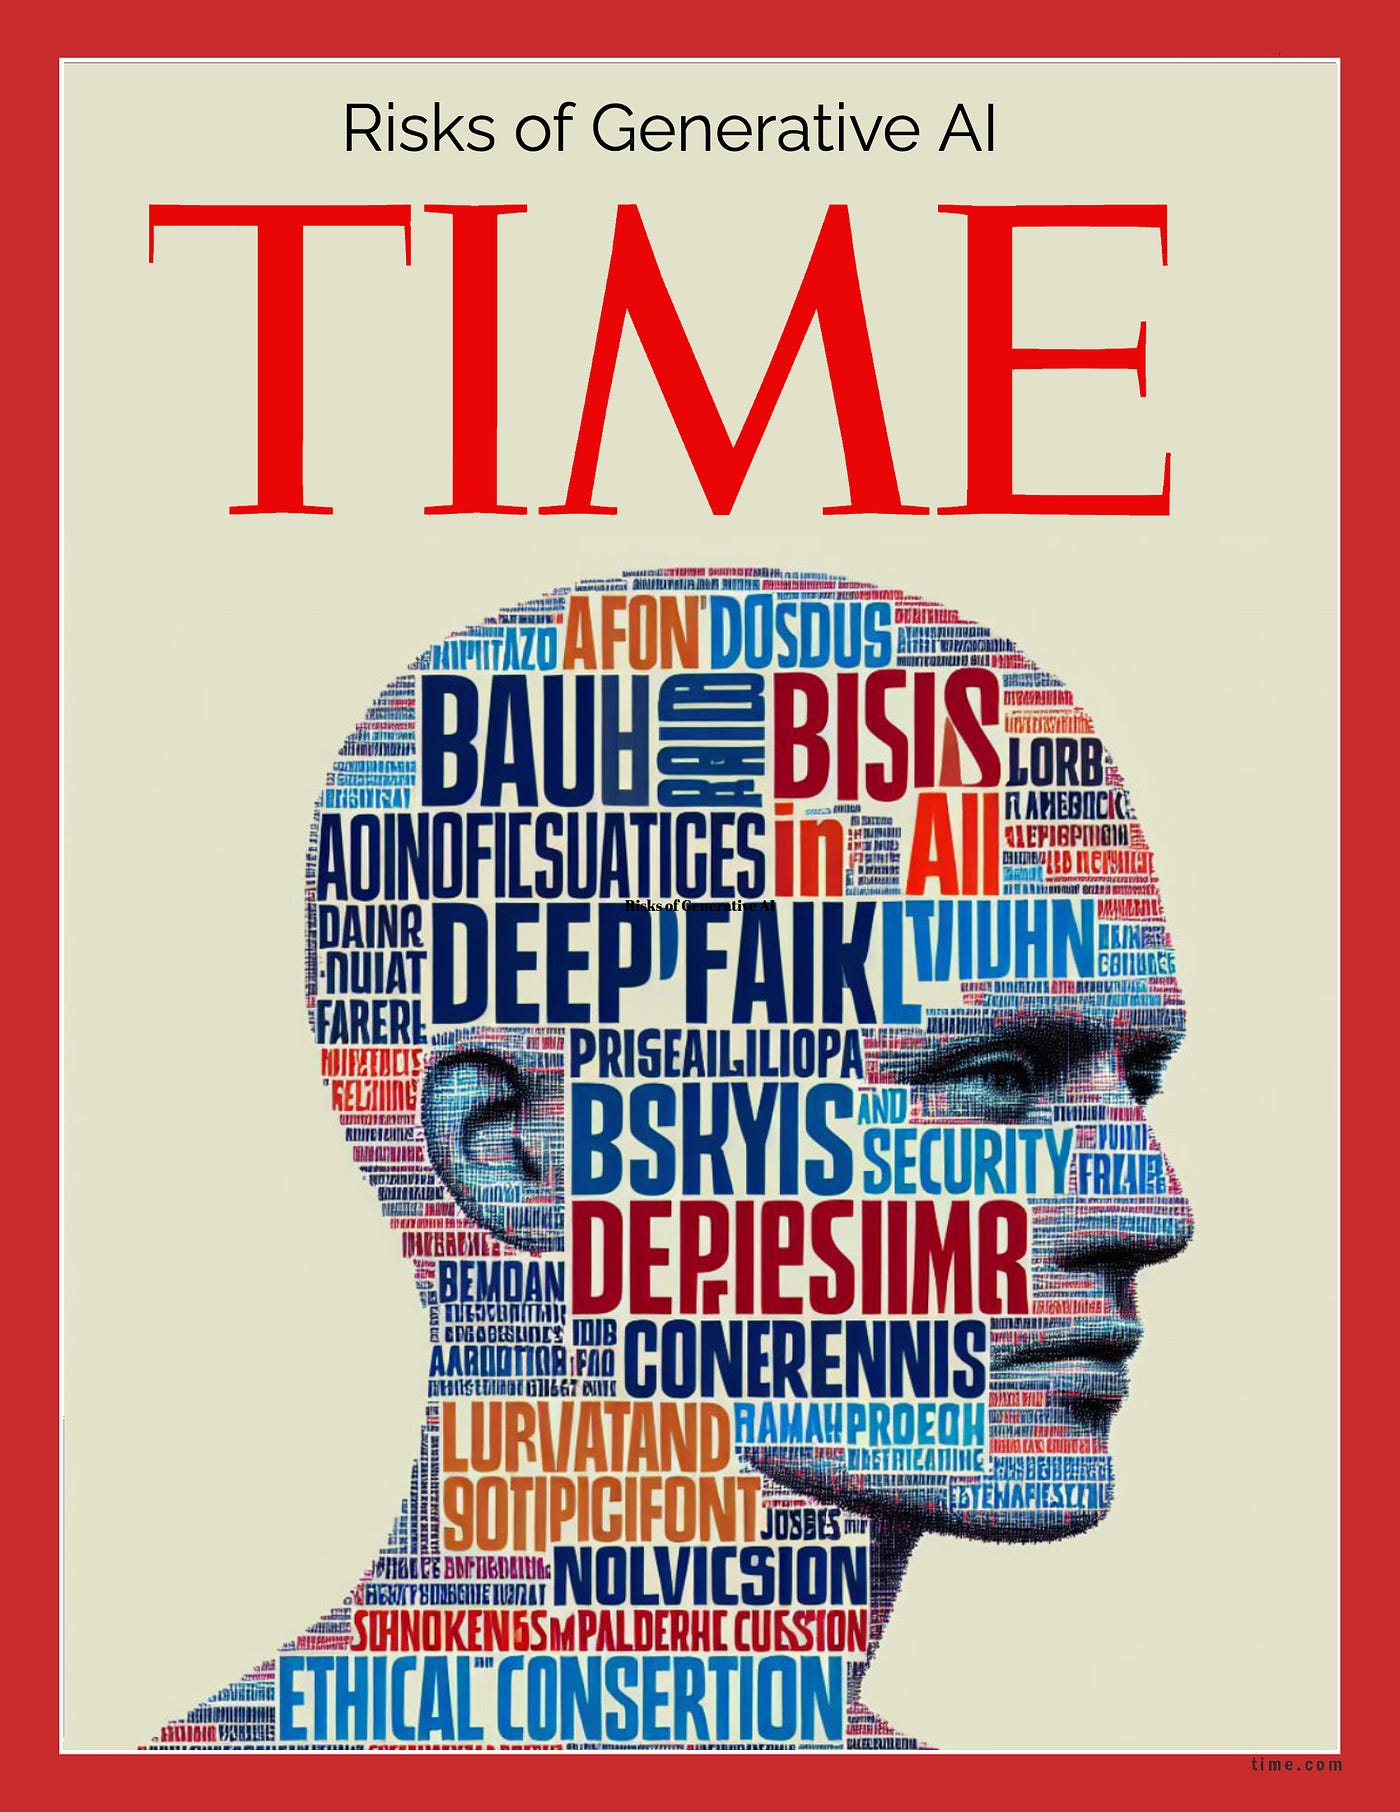 AI generative art cover for Time magazine, risk of generative AI